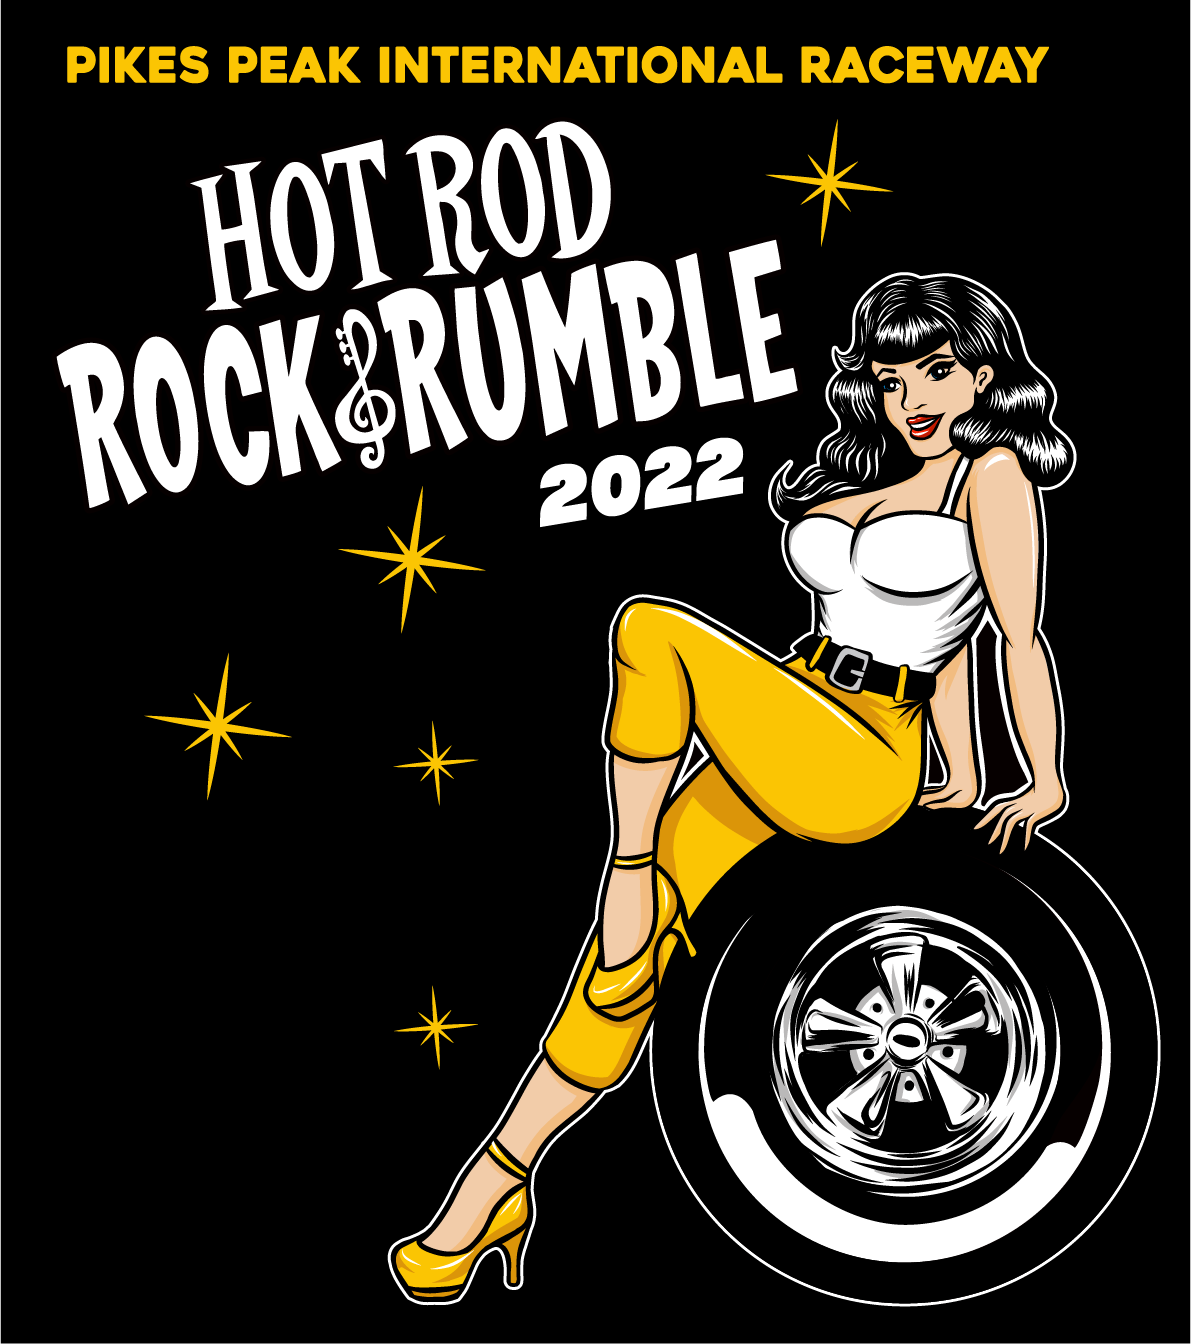 Gray Soul Clothing at Hot Rod Rock & Rumble